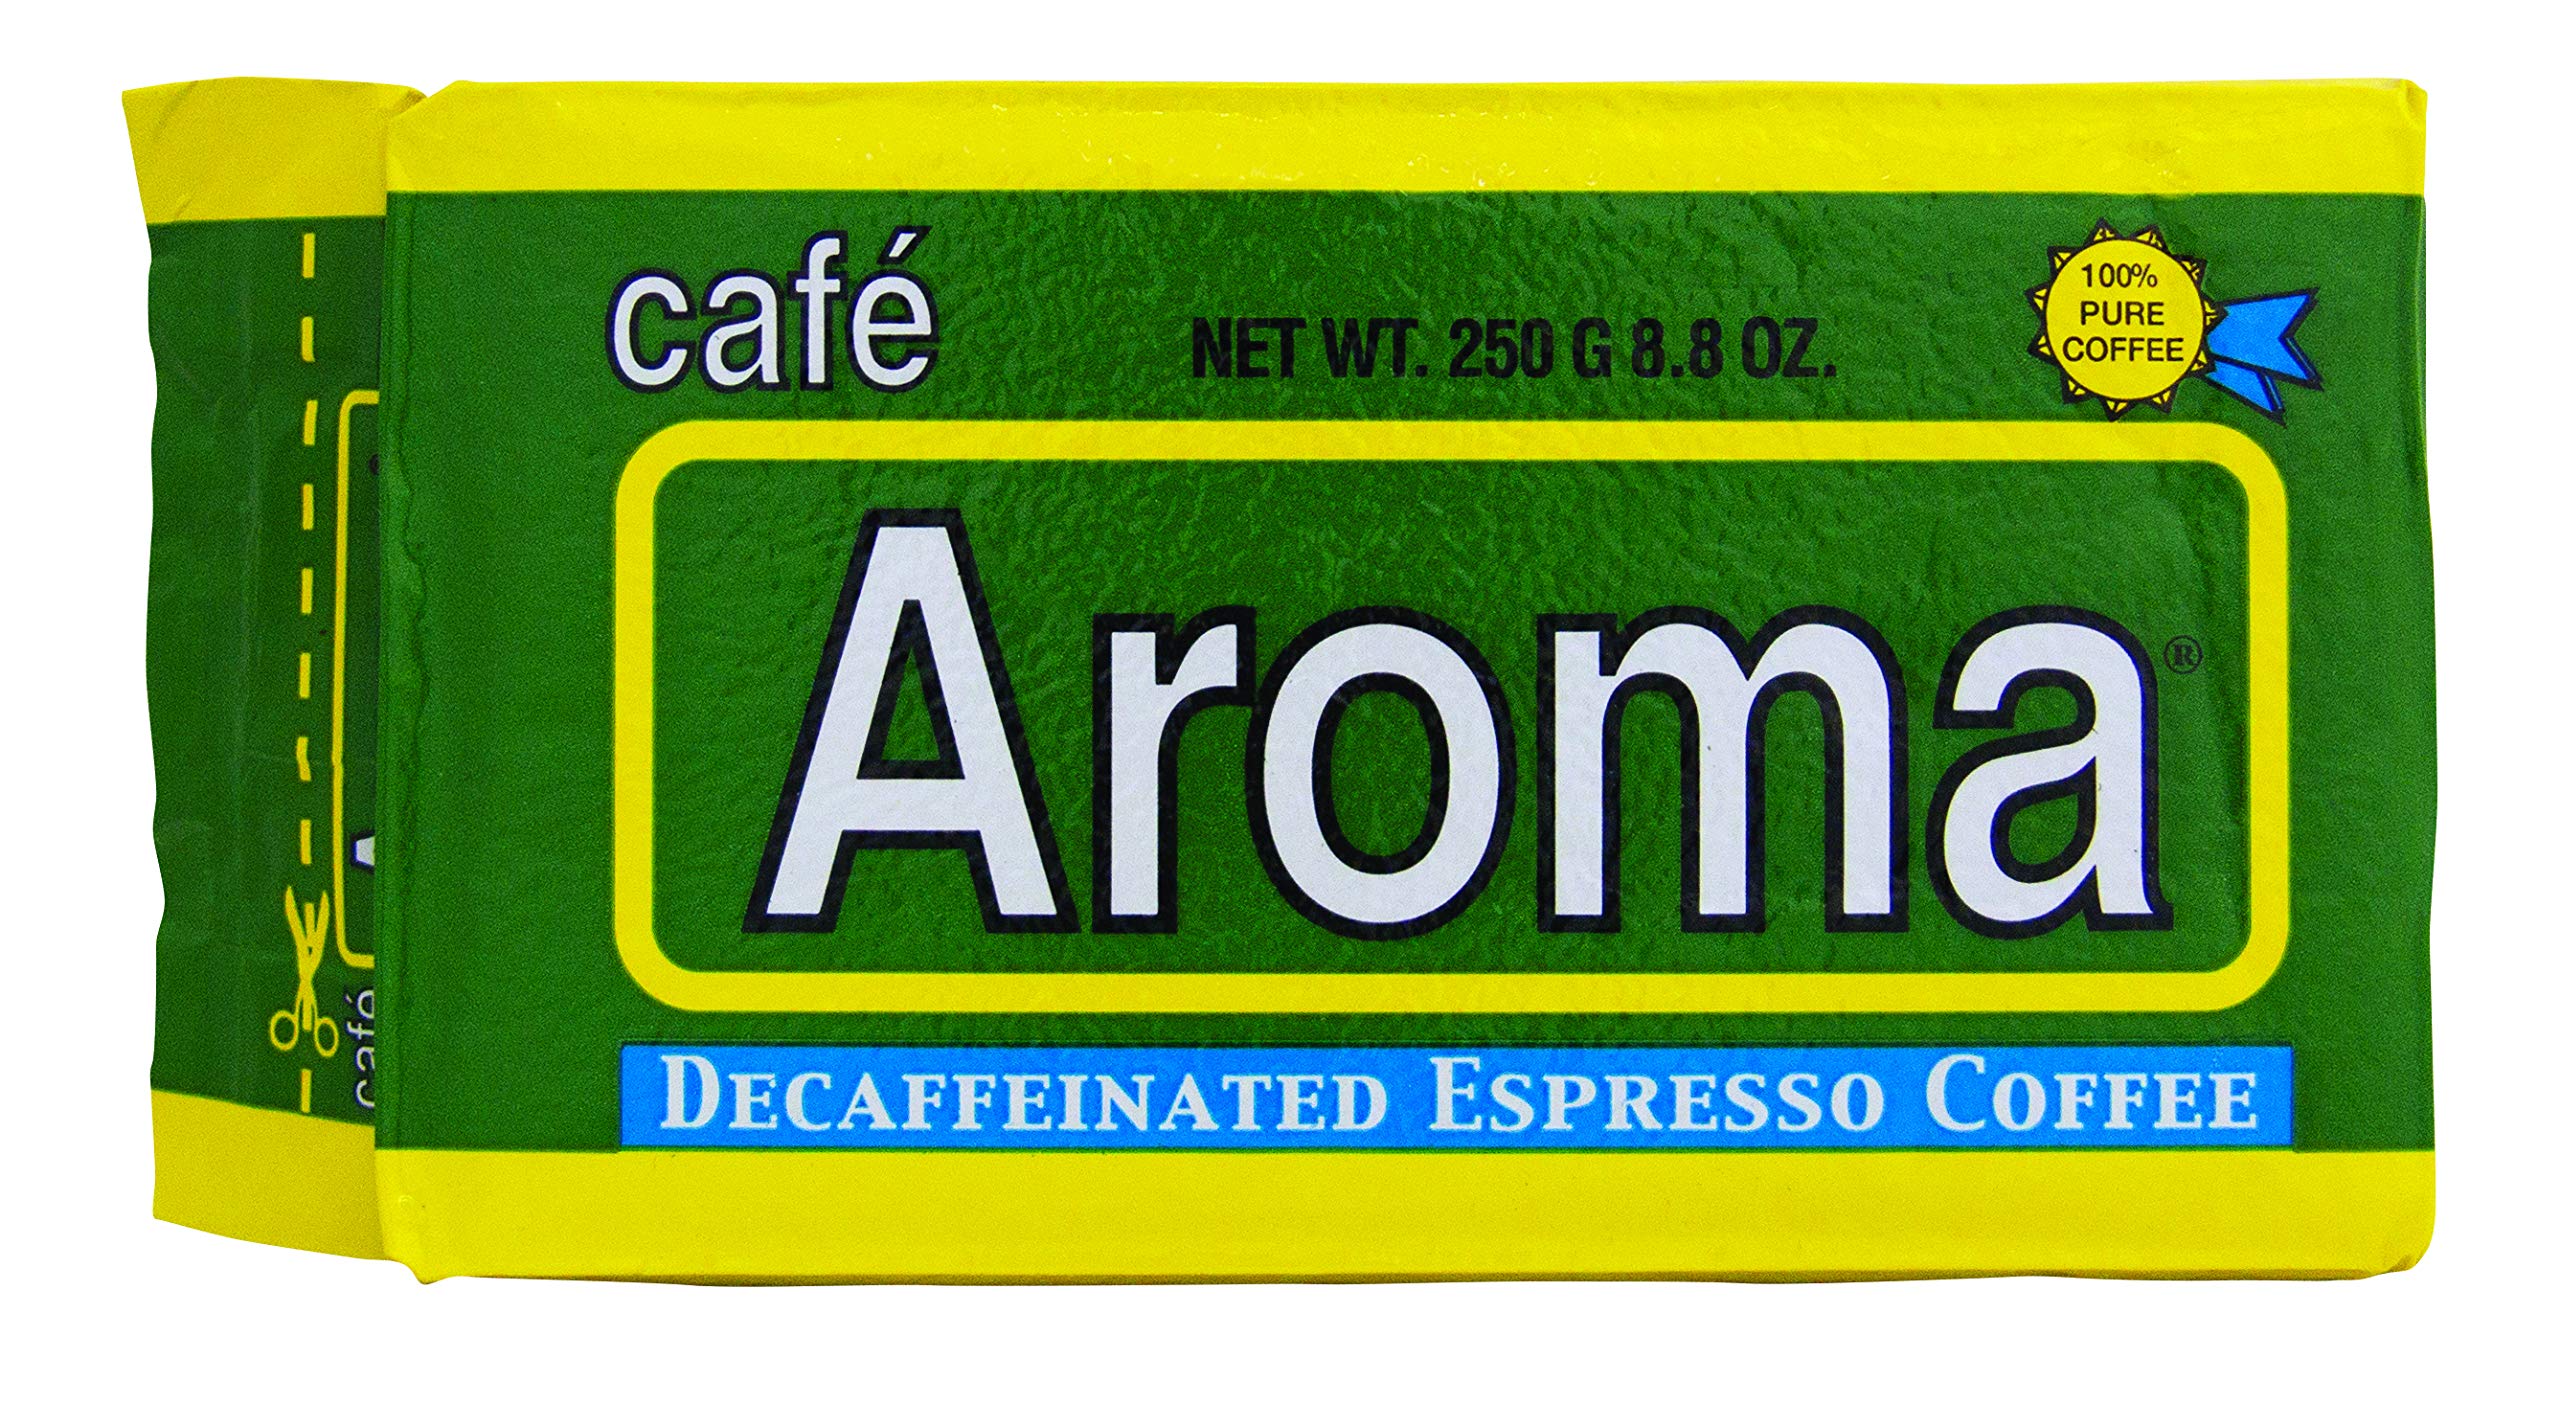 Decaf Ground Coffee - Premium Espresso from Cafe Aroma (Pack of 24) Cuban Style Decaffeinated Dark Roast Ground Coffee, Vacuum Pack 250g (8.83 oz)